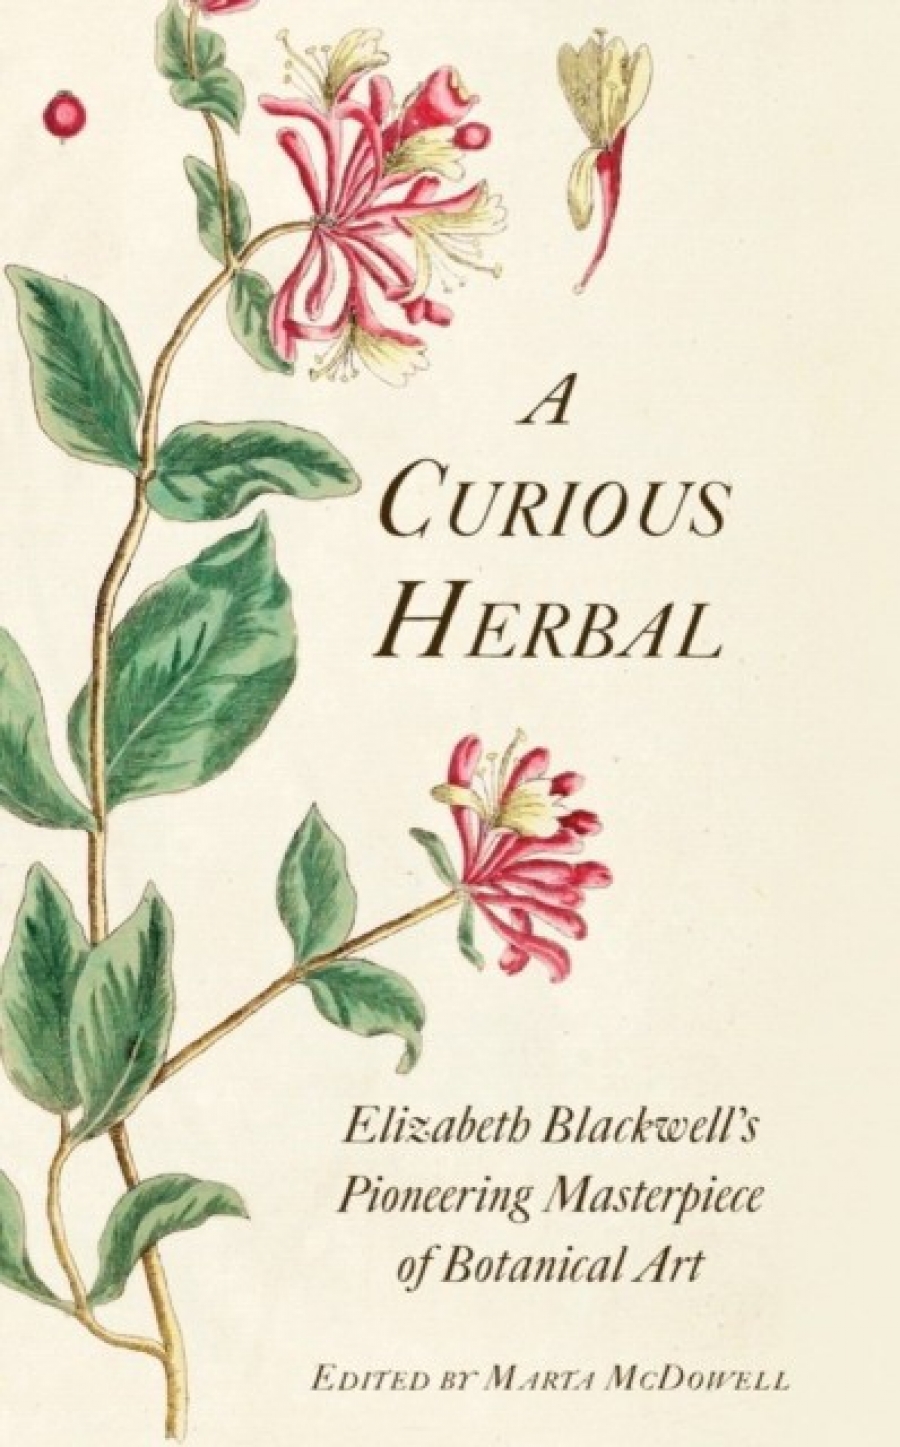 Hermanson-edwar A Curious Herbal: Elizabeth Blackwell's Pioneering Masterpiece of Botanical Art 